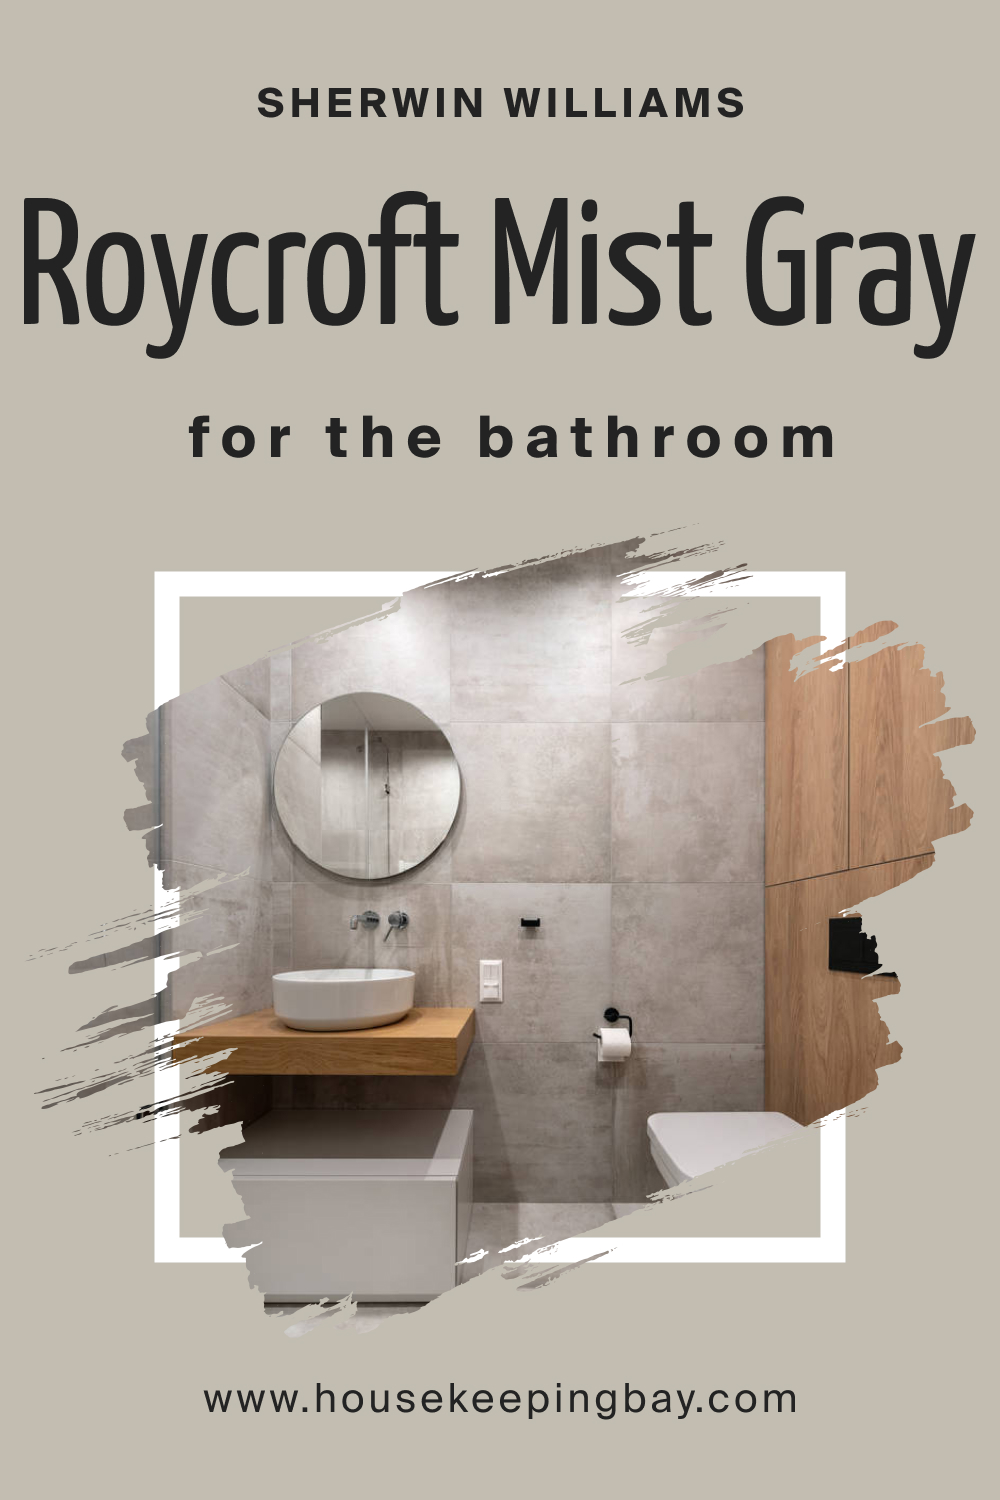 Sherwin Williams. SW 2844 Roycroft Mist Gray For the Bathroom